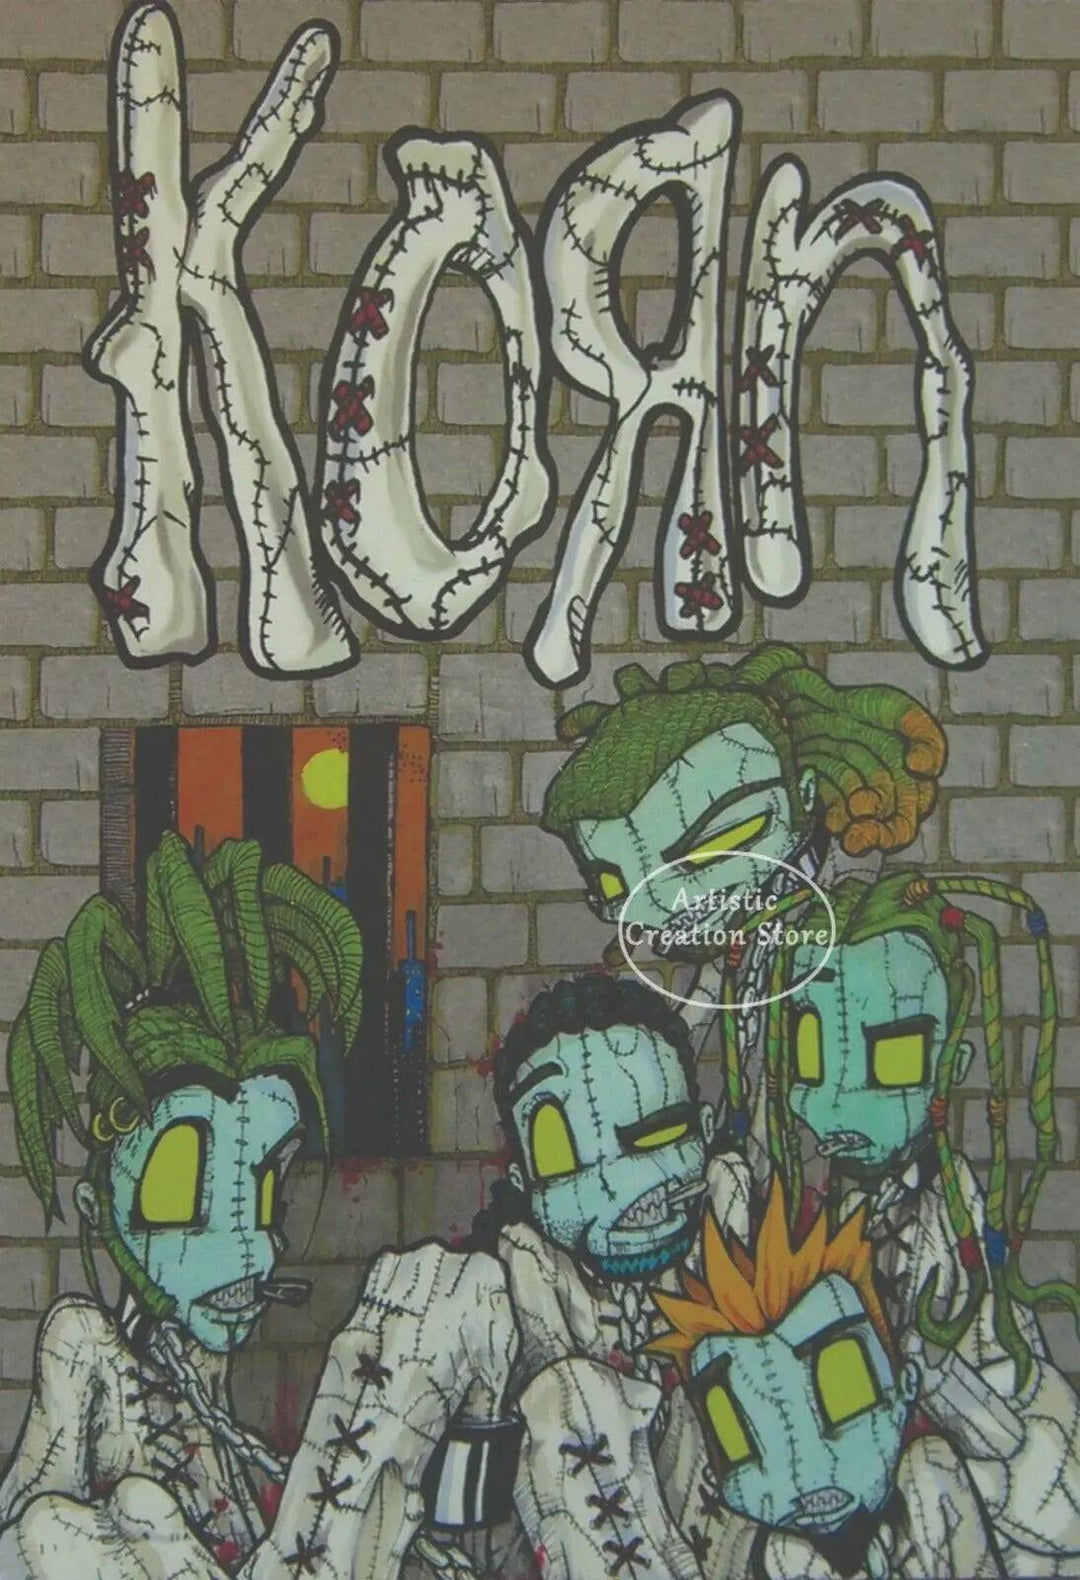 Korn Band Music Posters - Rock Wall Art - Modern Room Decor - Brand My Case